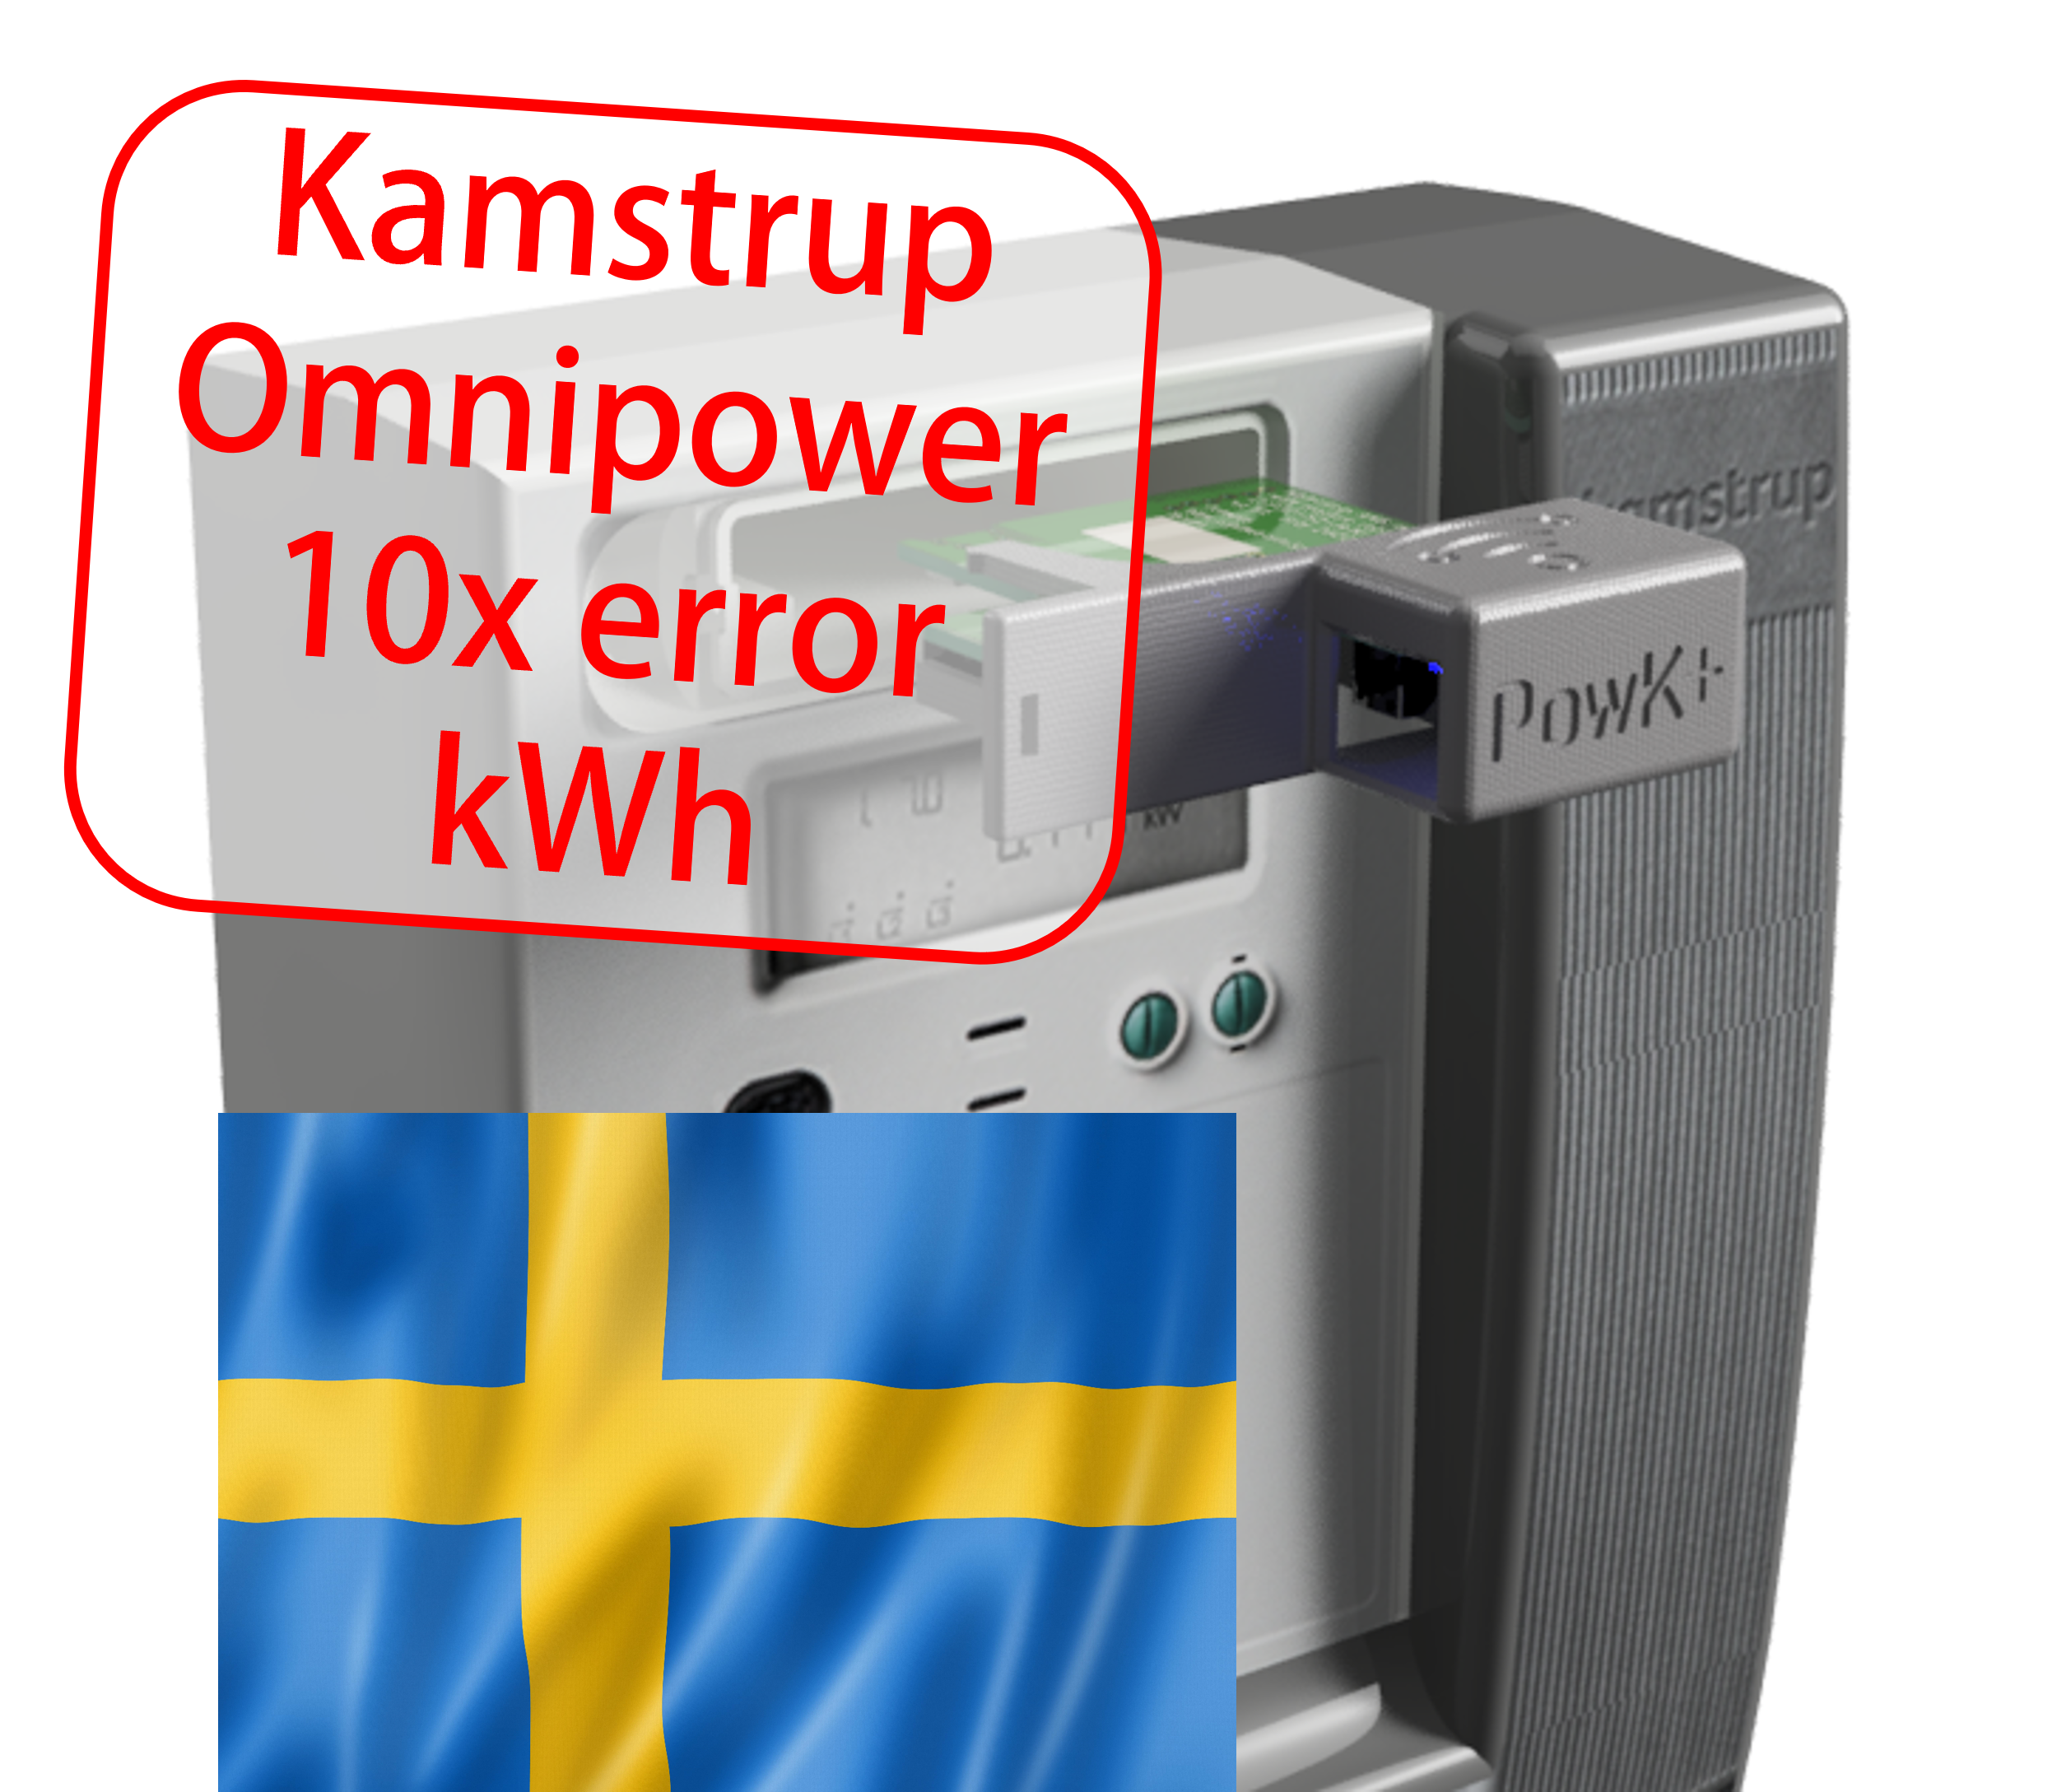 Kamstrup Omnipower in Sweden: 10x kWh error